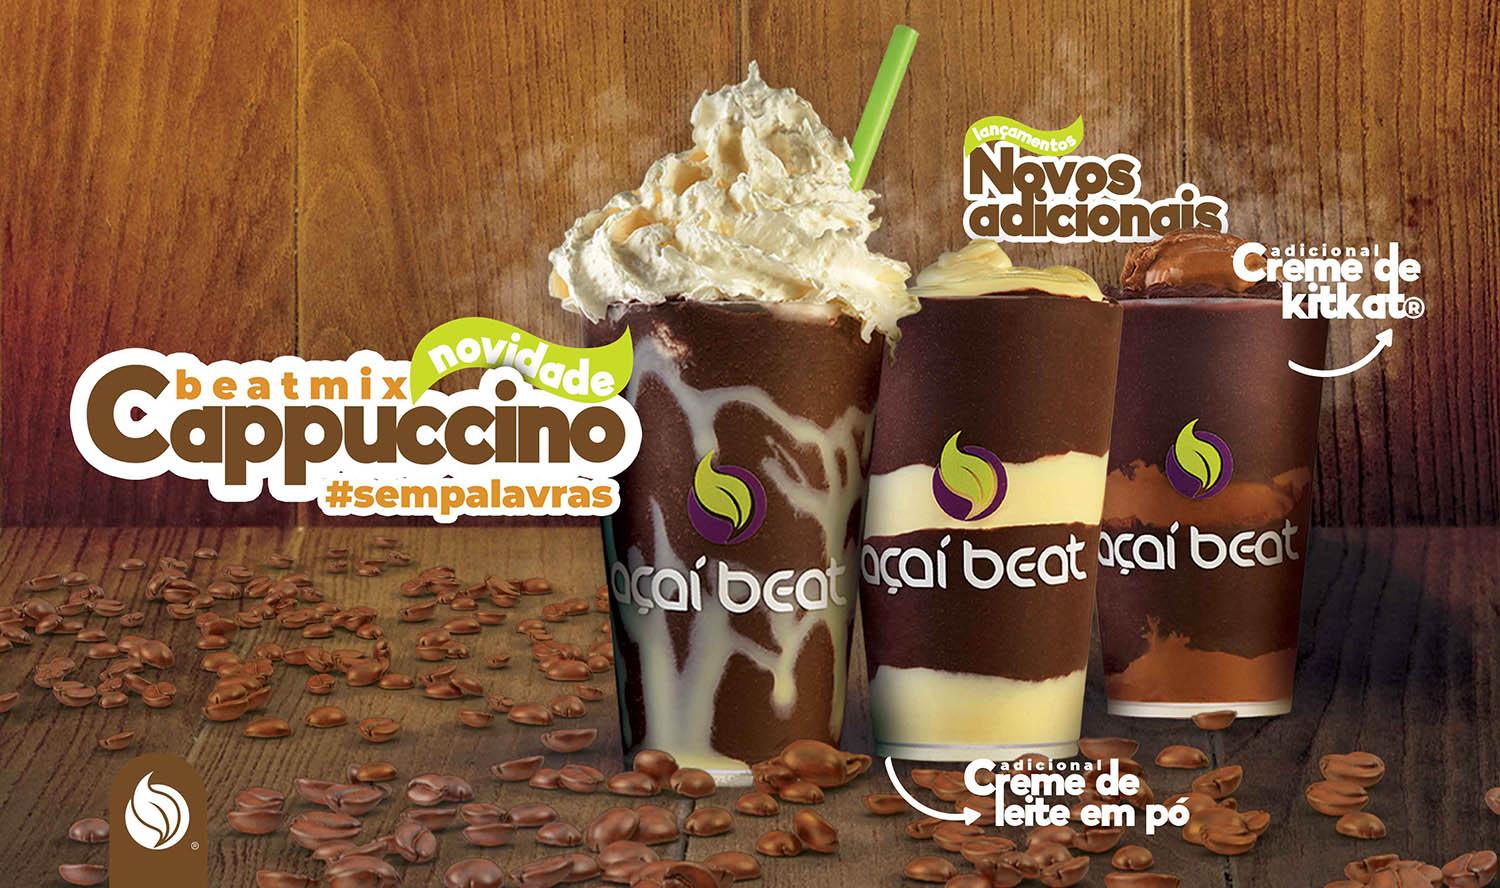 Product cappuccino-adicionais-acaibeat-2019 | Inova House - Agência de Publicidade e Marketing image